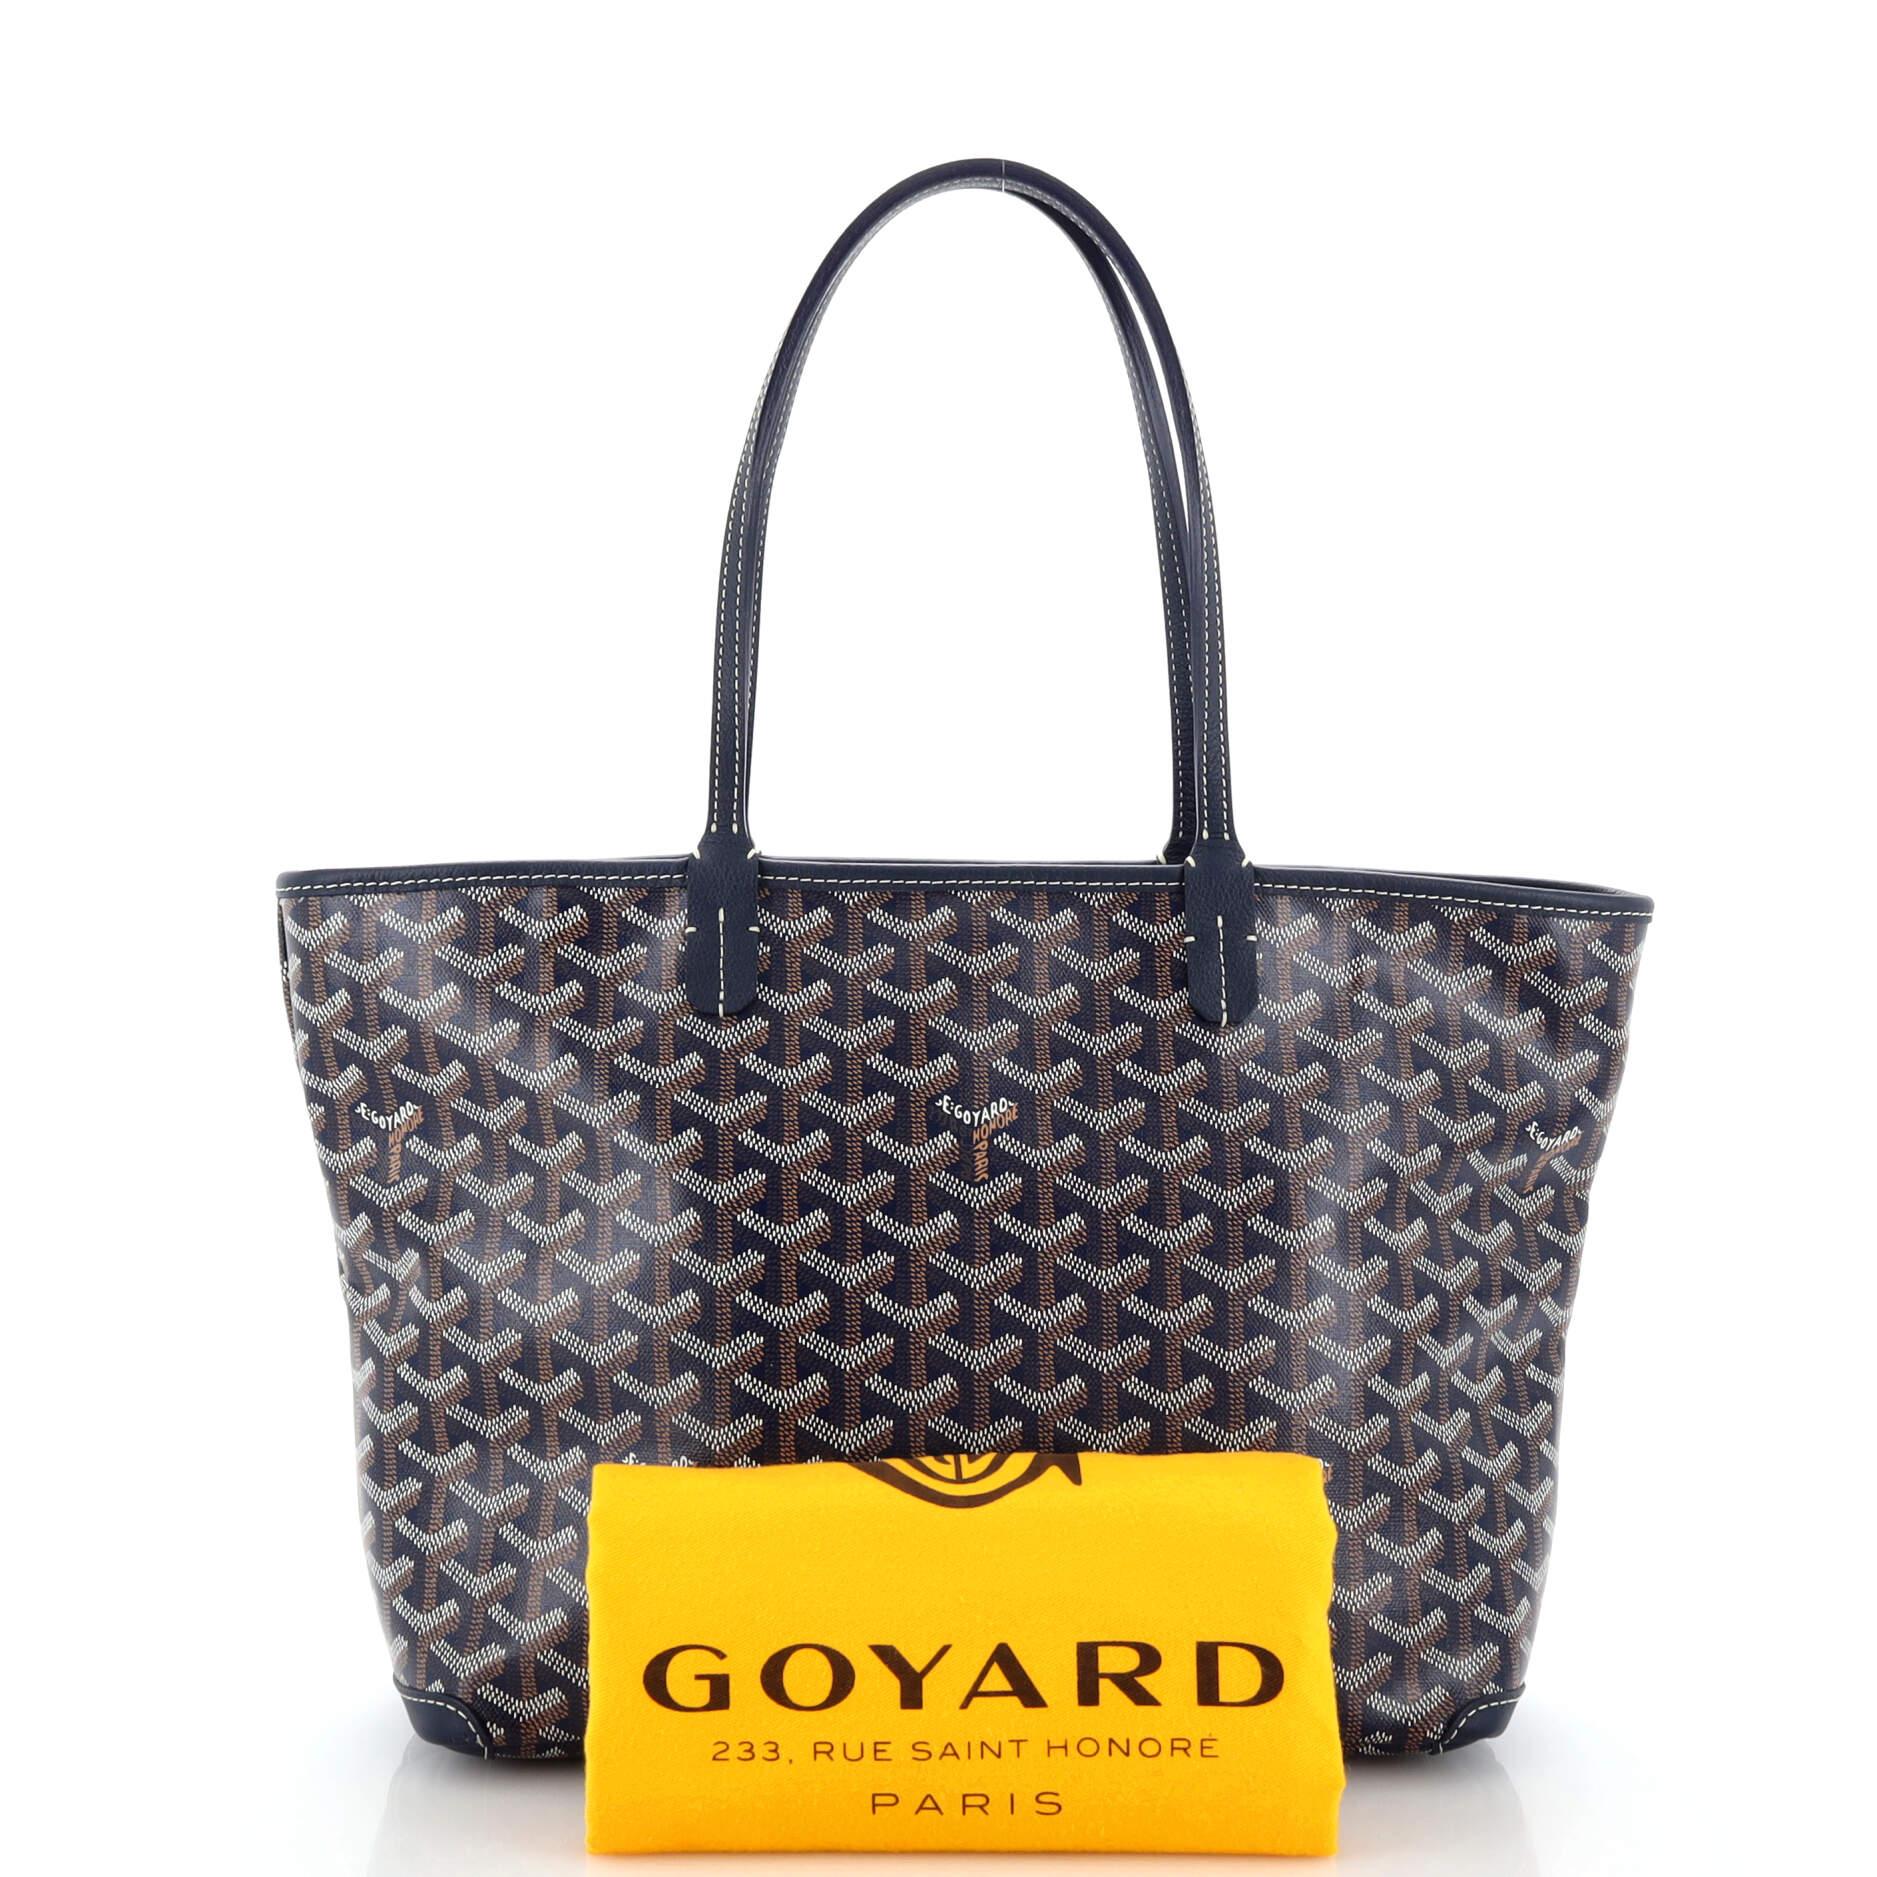 Goyard Artois Pm Bag - For Sale on 1stDibs  goyard artois pm vs mm, goyard  artois tote pm, artois pm bag price uk